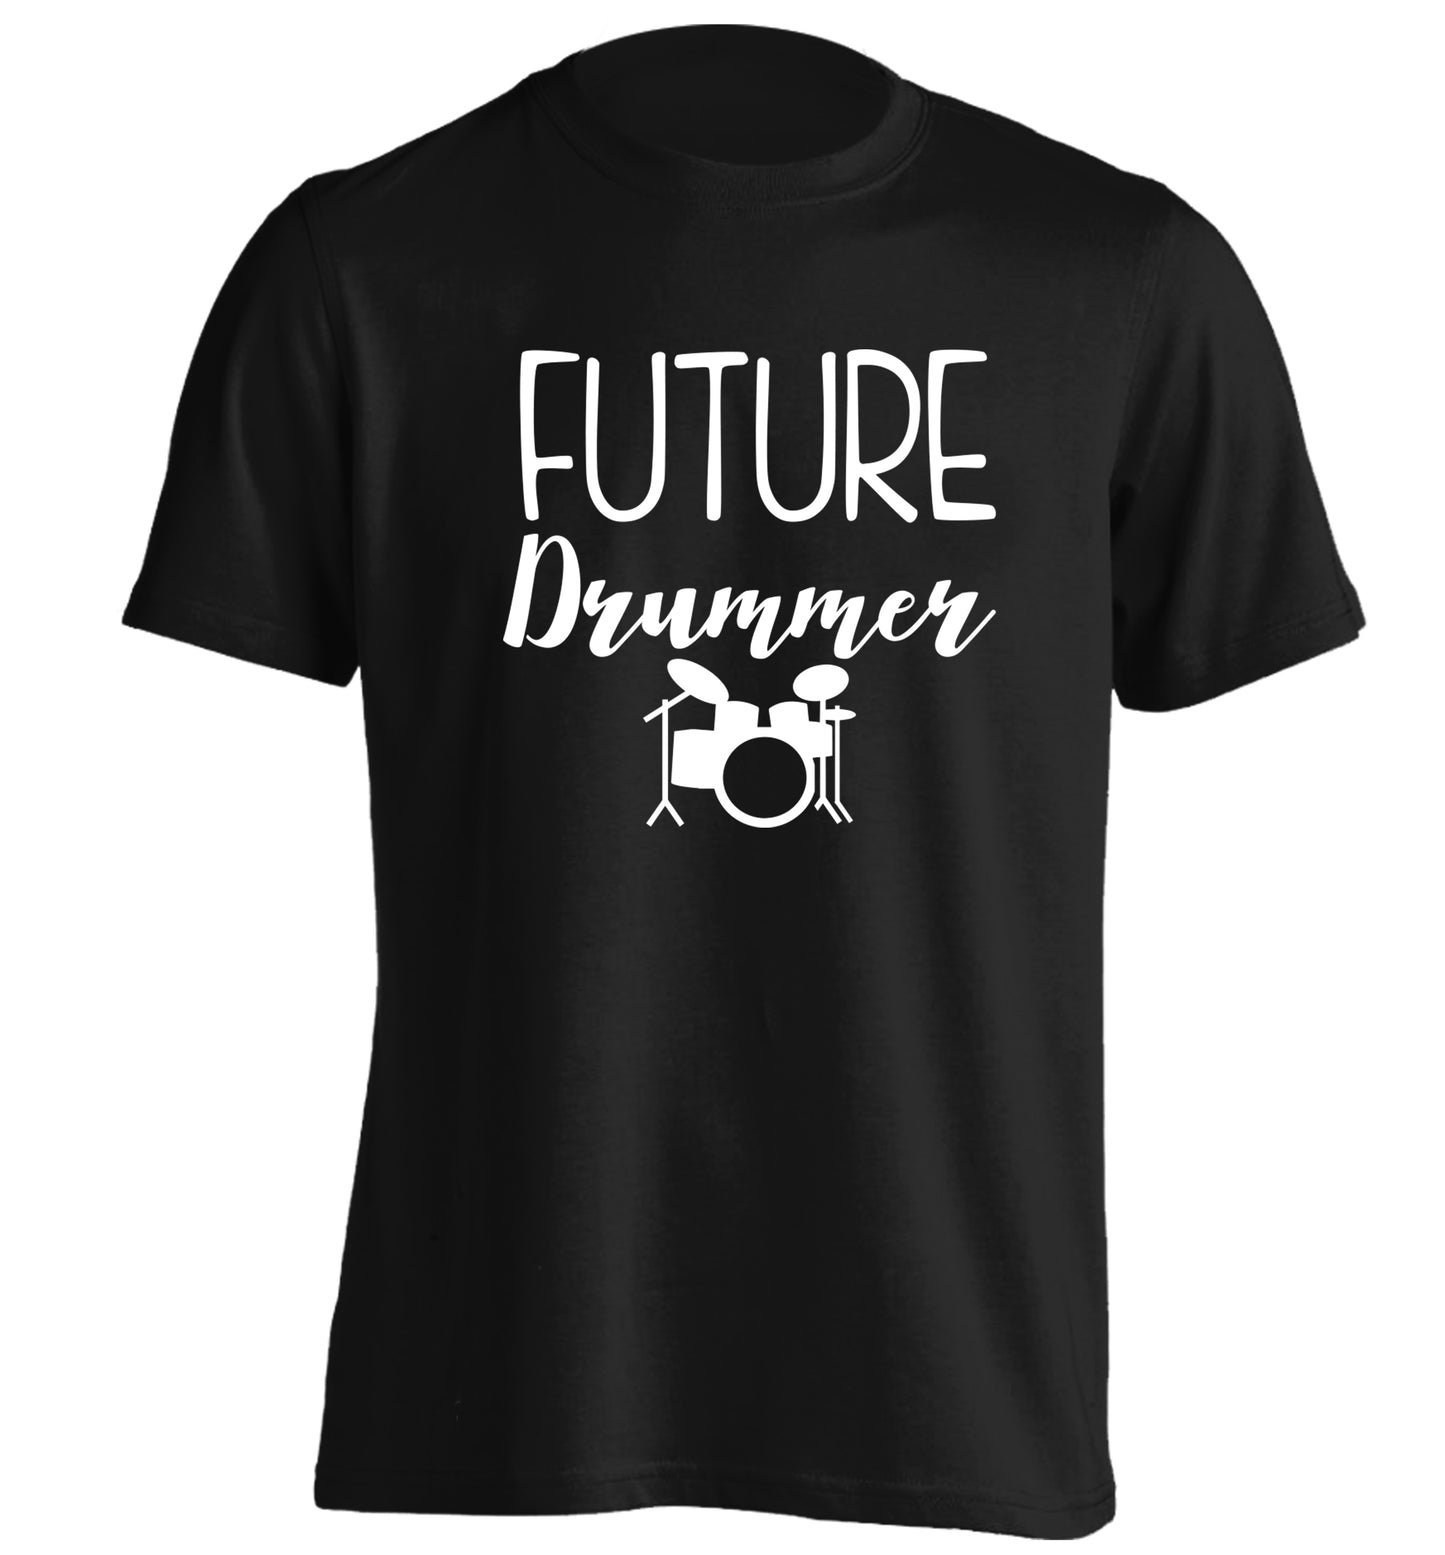 Future drummer adults unisex black Tshirt 2XL